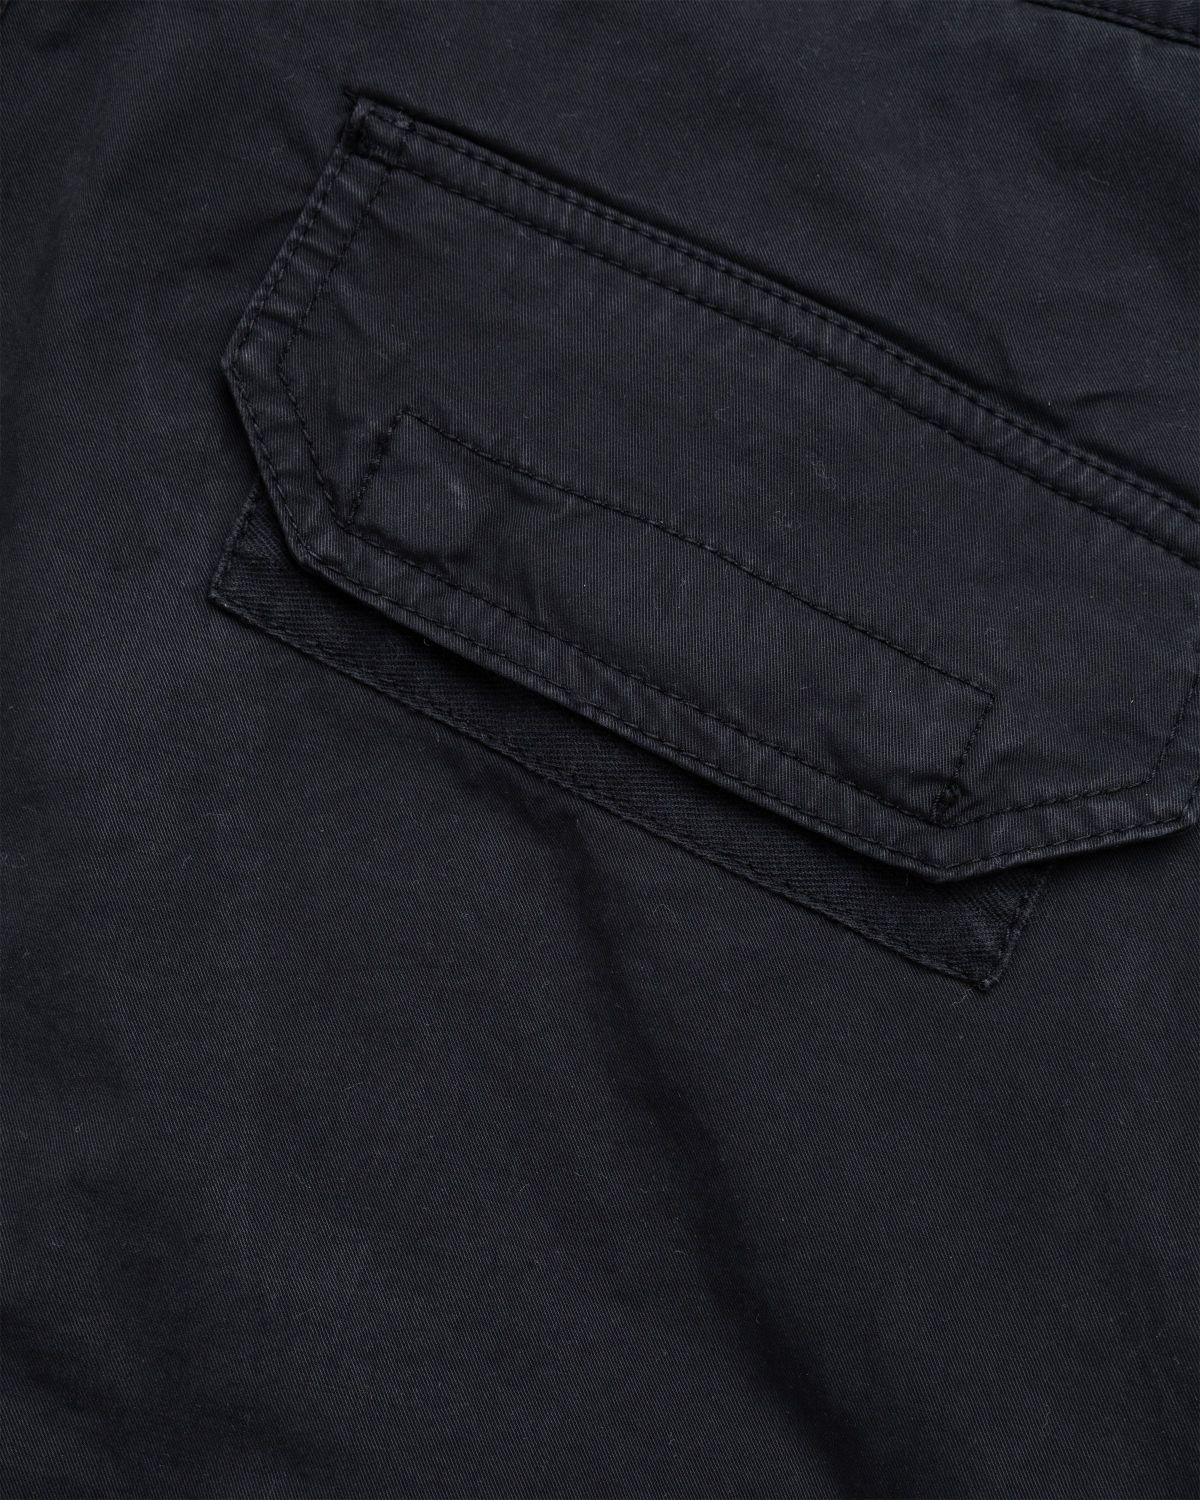 Stone Island – Stretch Cotton Gabardine Cargo Pants Black - Pants - Black - Image 6